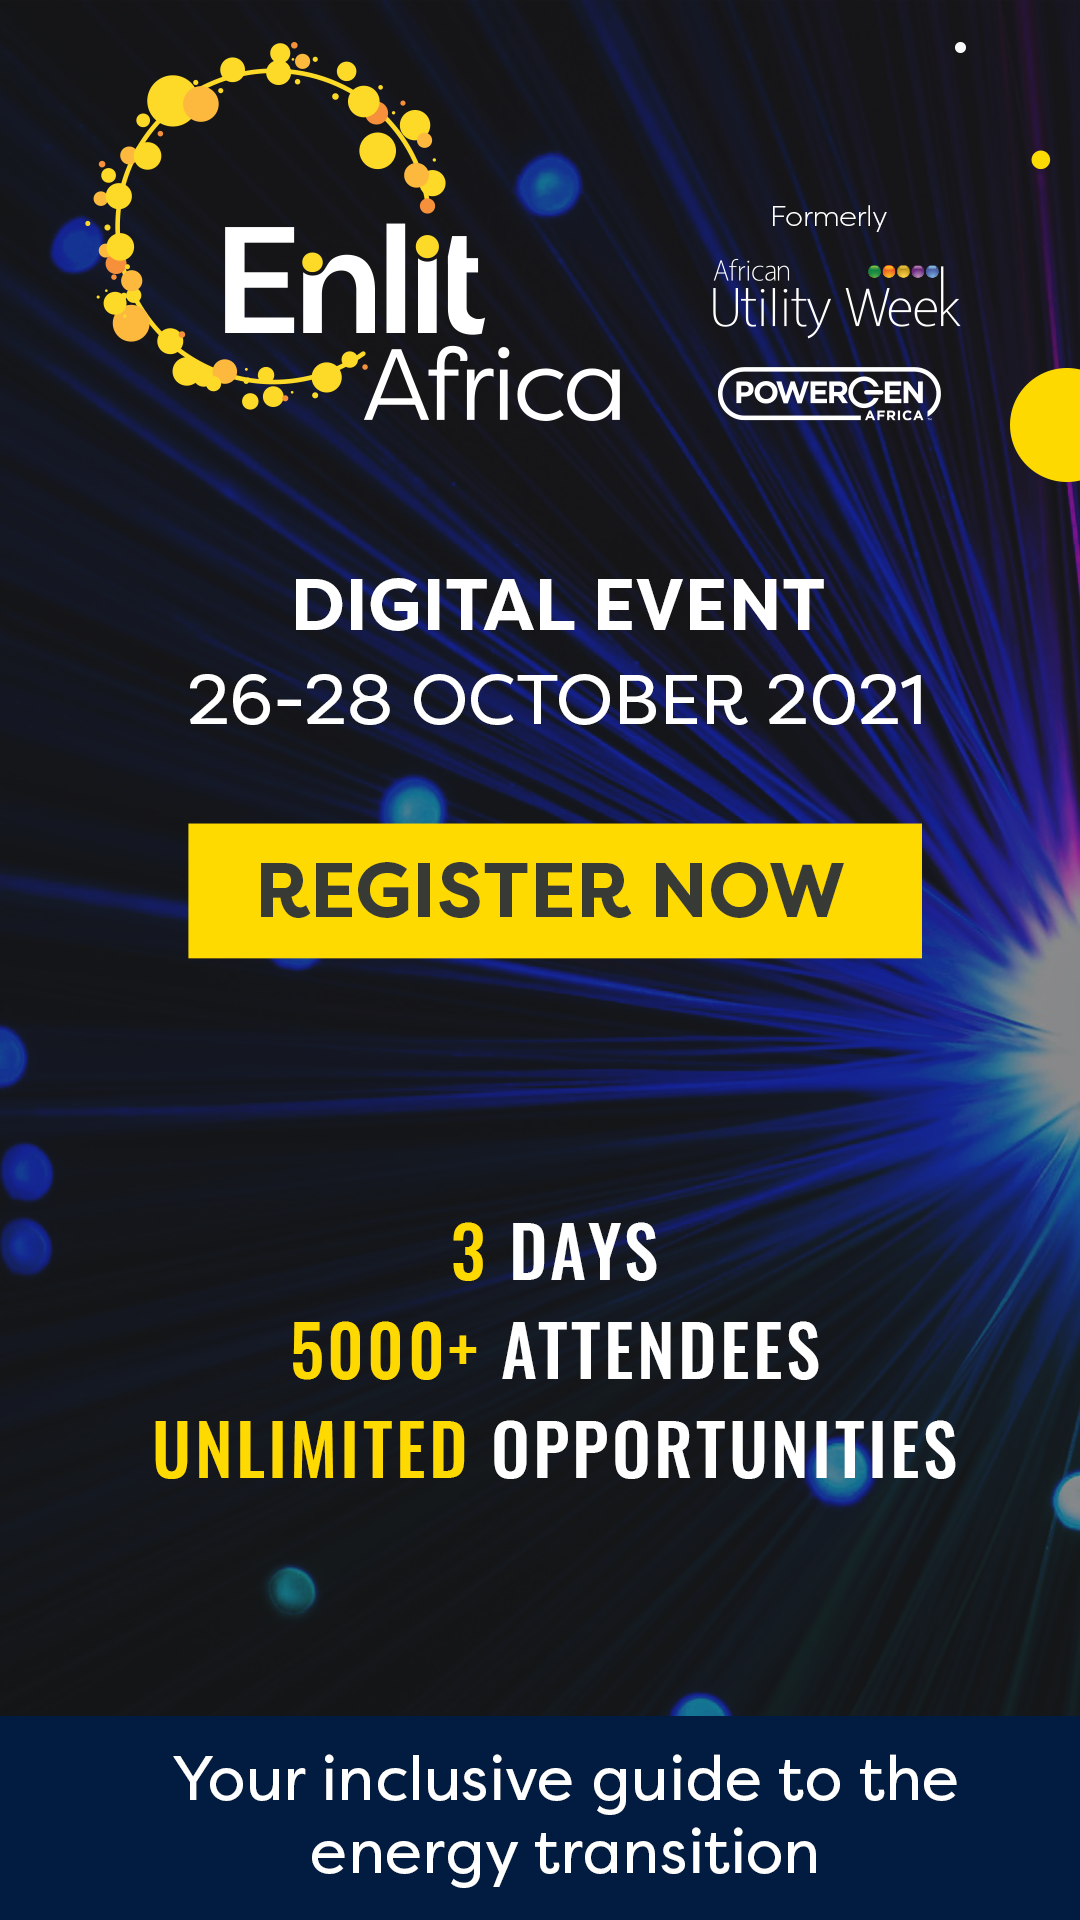 Register now for the Enlit Africa Digital Event from 26-28 October 2021